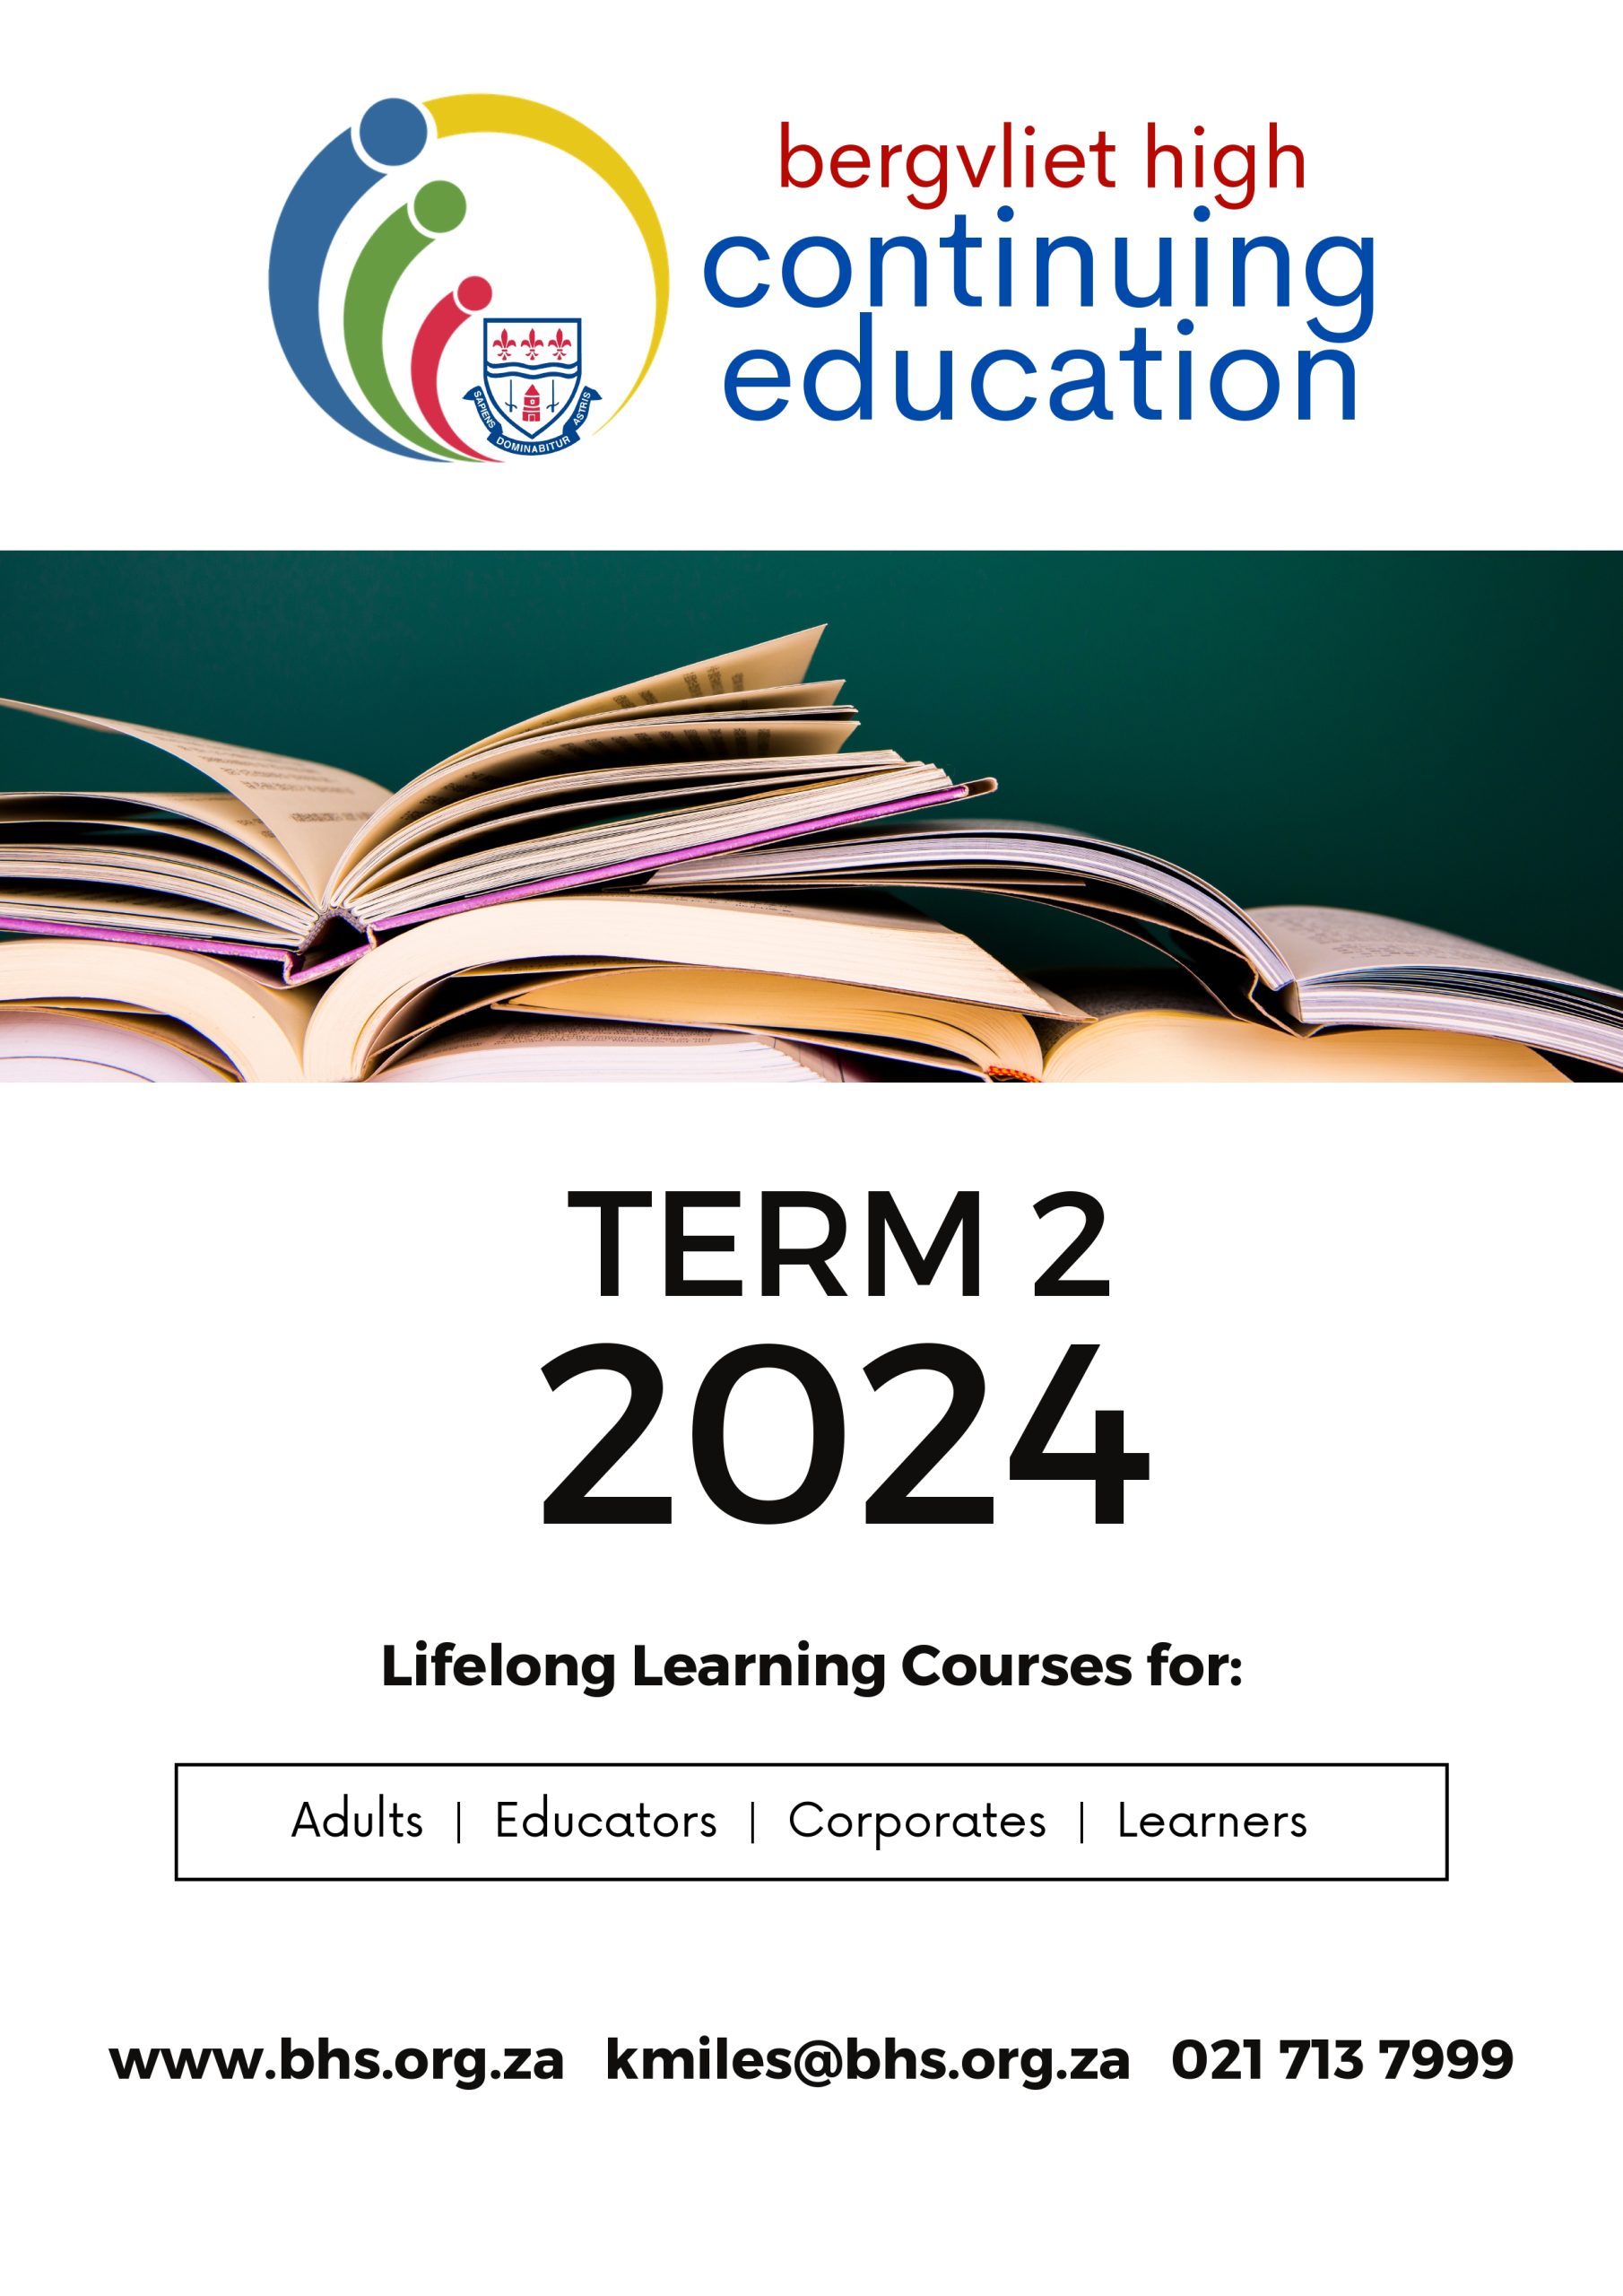 Continuing Education - Term 2 2024